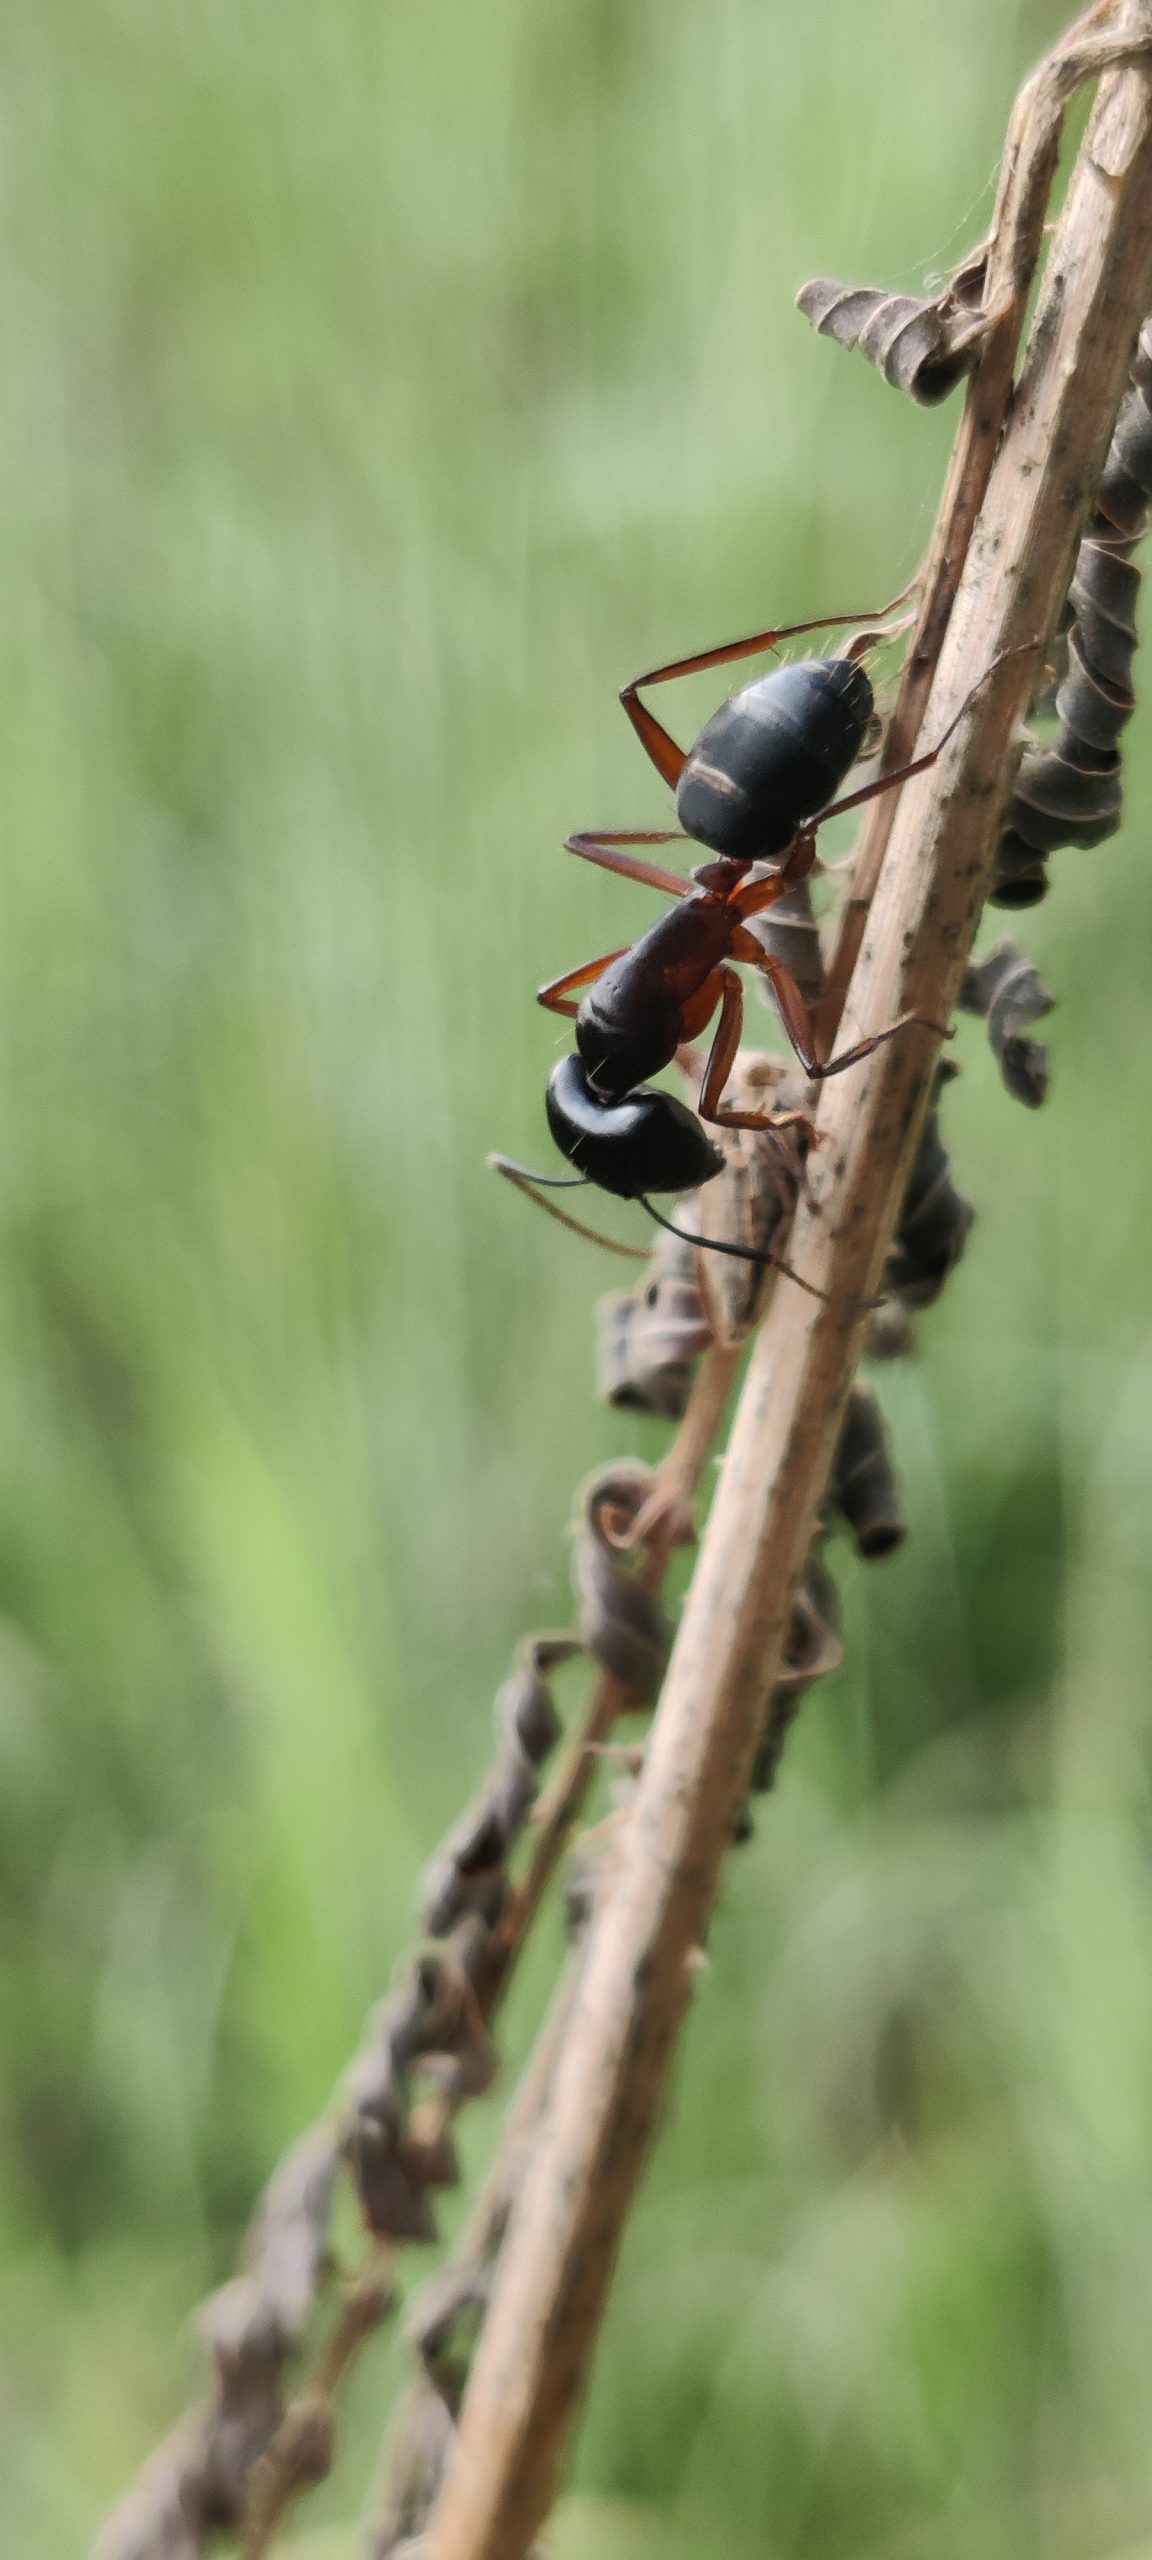 Ant on plant stem